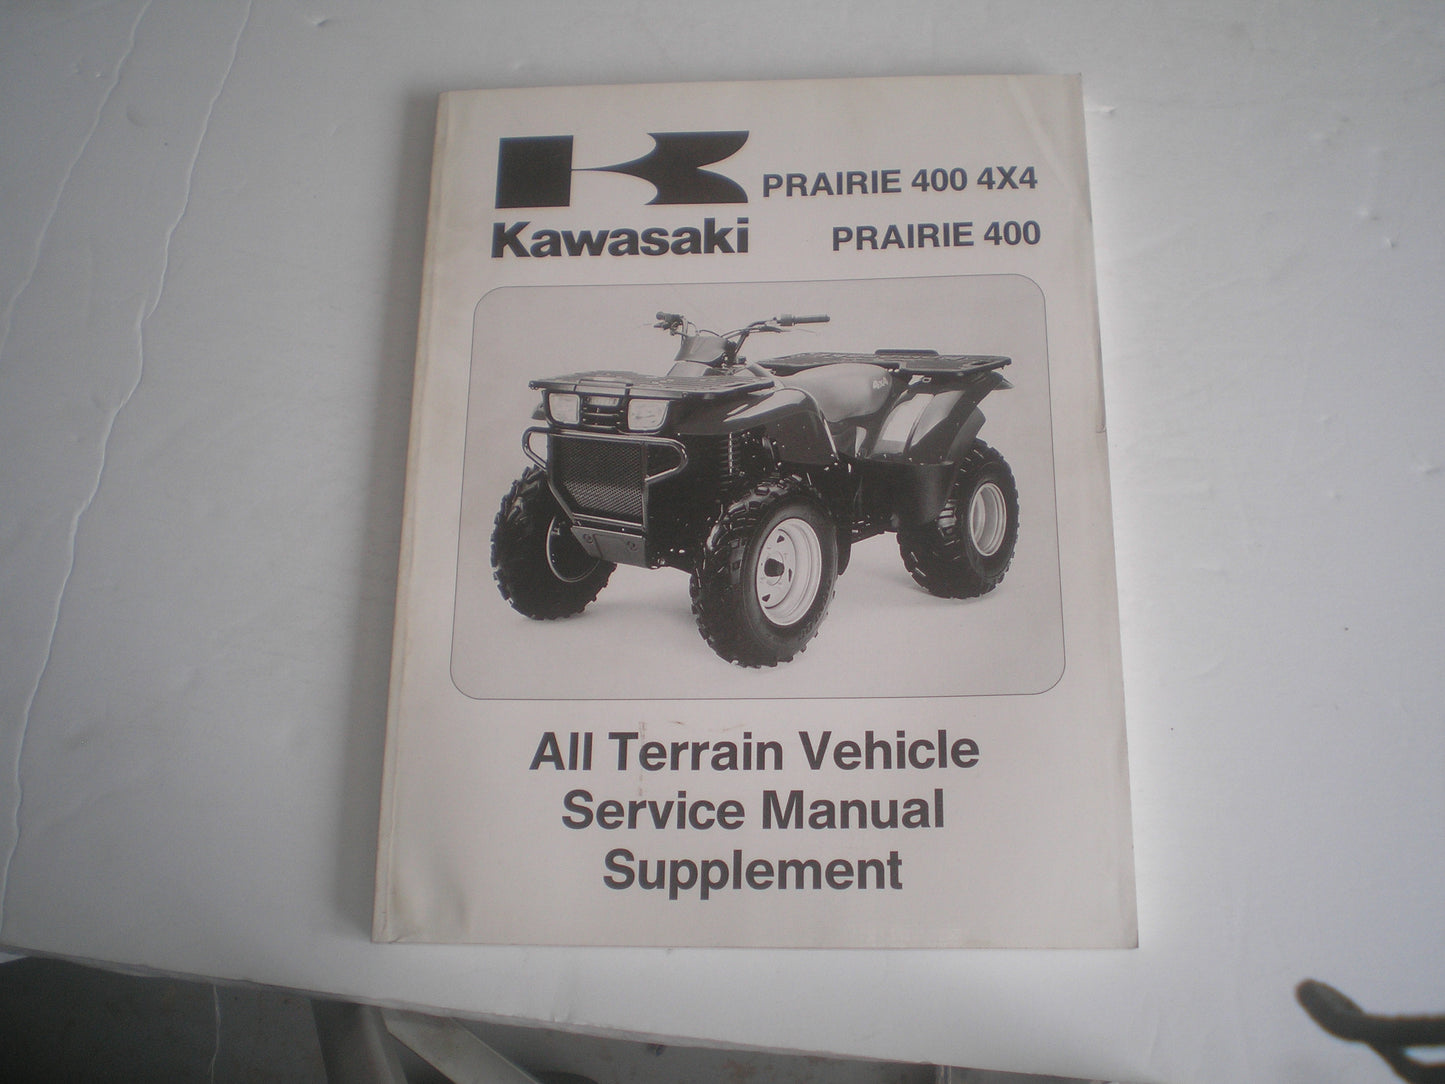 KAWASAKI KVF400 C1/D1  Prairie 400 4x4  1999  Service Manual  99924-1243-51  #1624